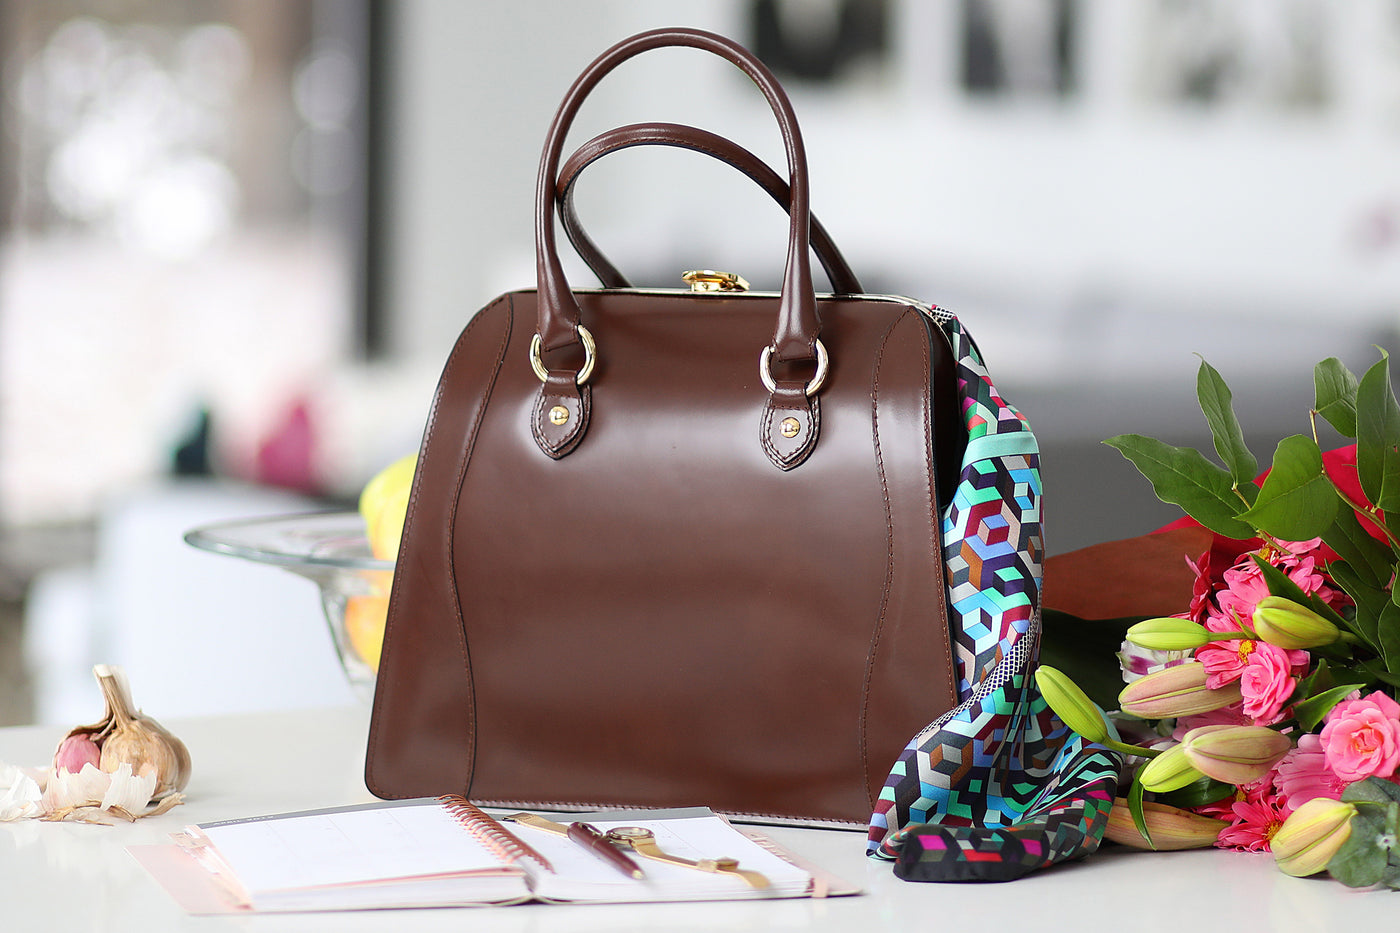 Belmore Boutique | Italian Leather Handbags & Accessories